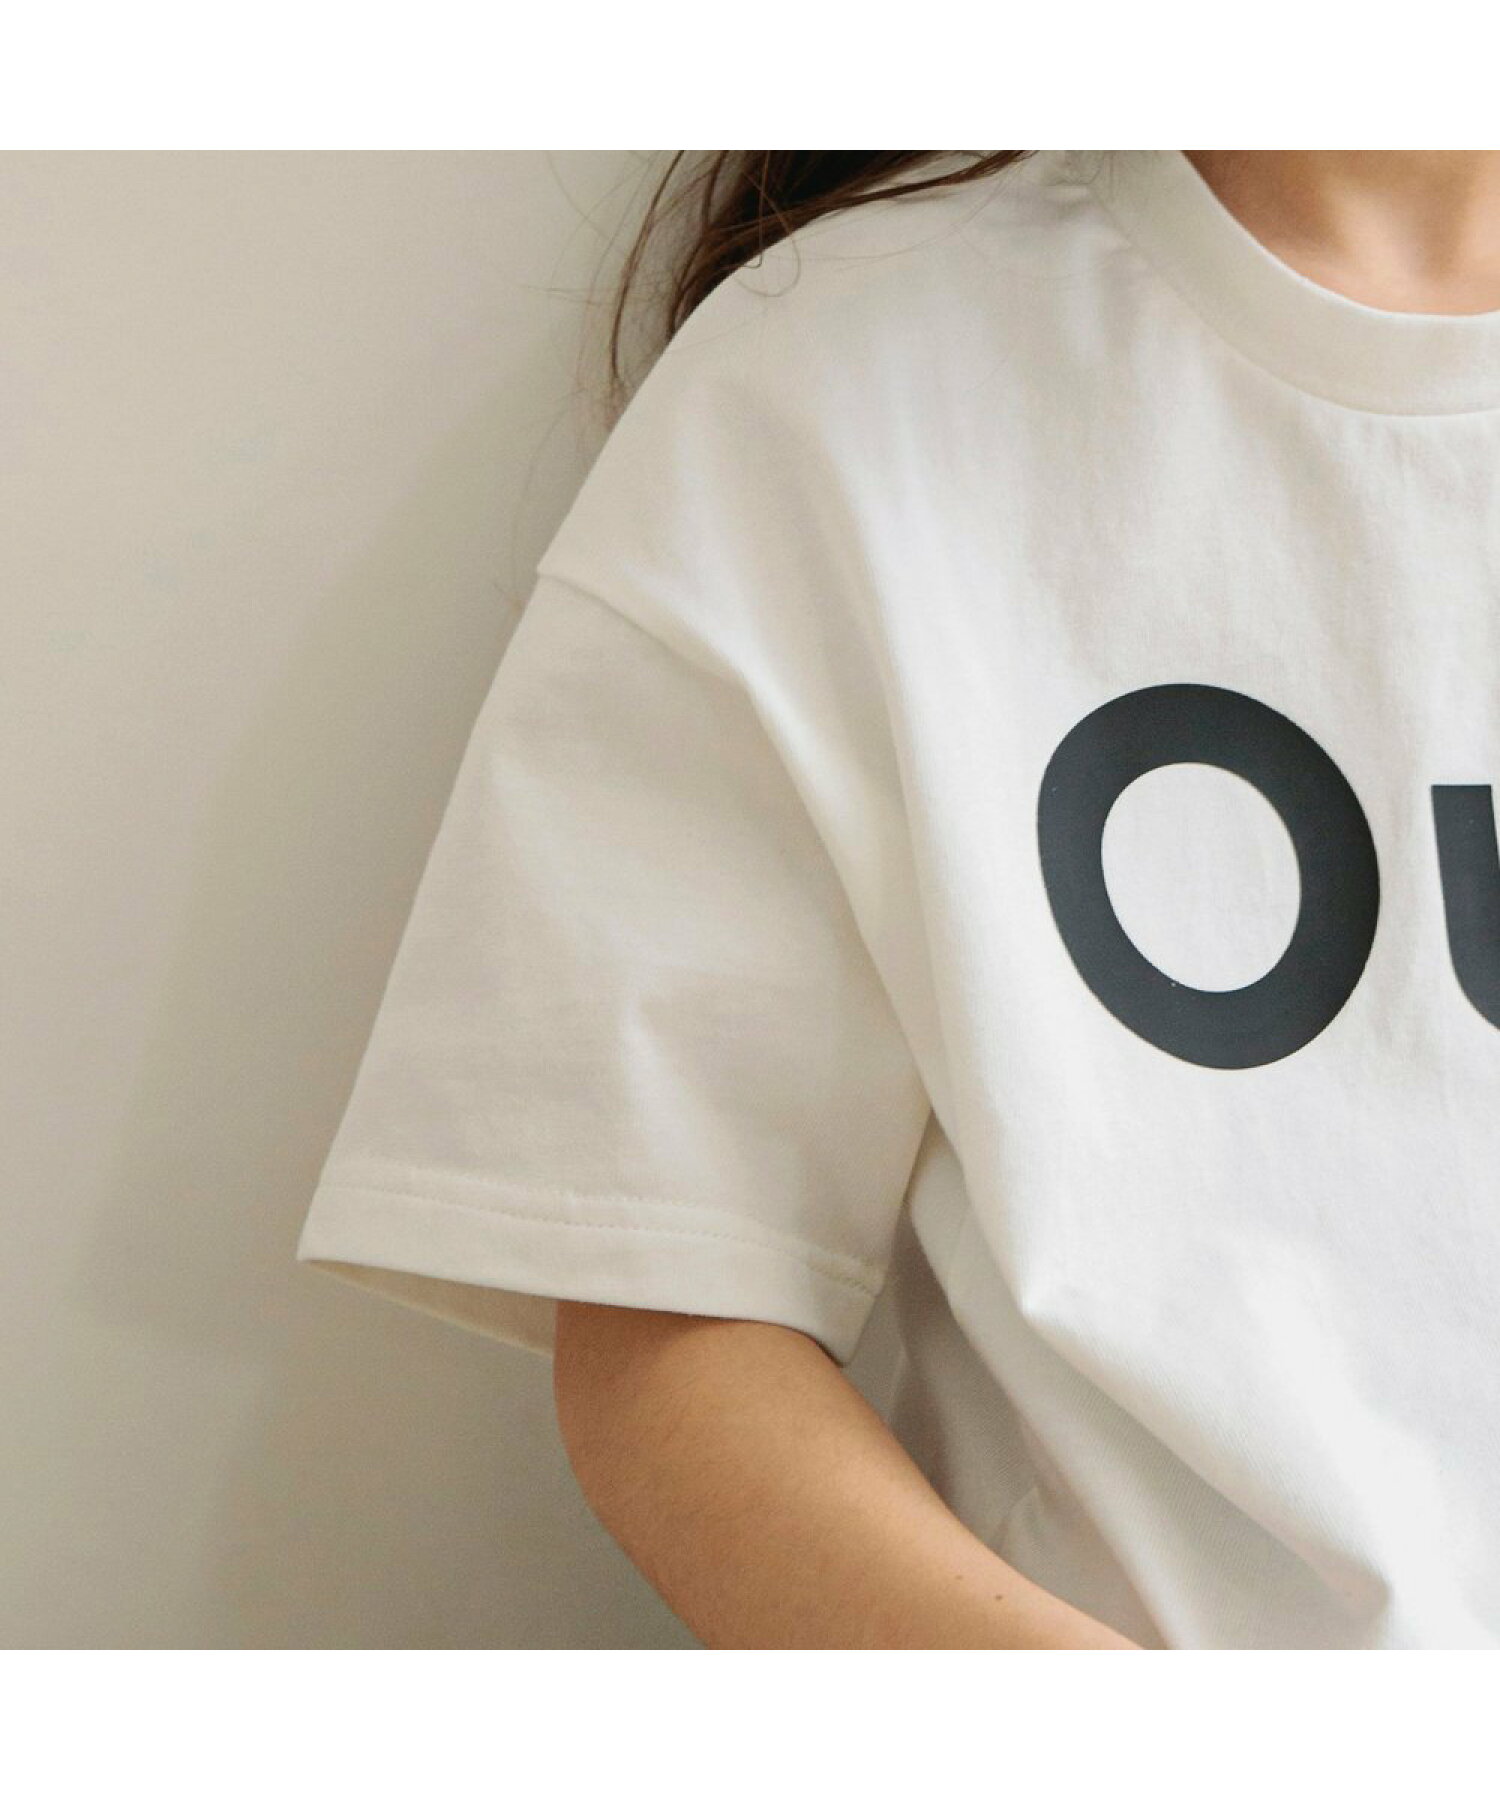 【Ou? by EDWIN】Ou?BIGロゴ半袖Tシャツ